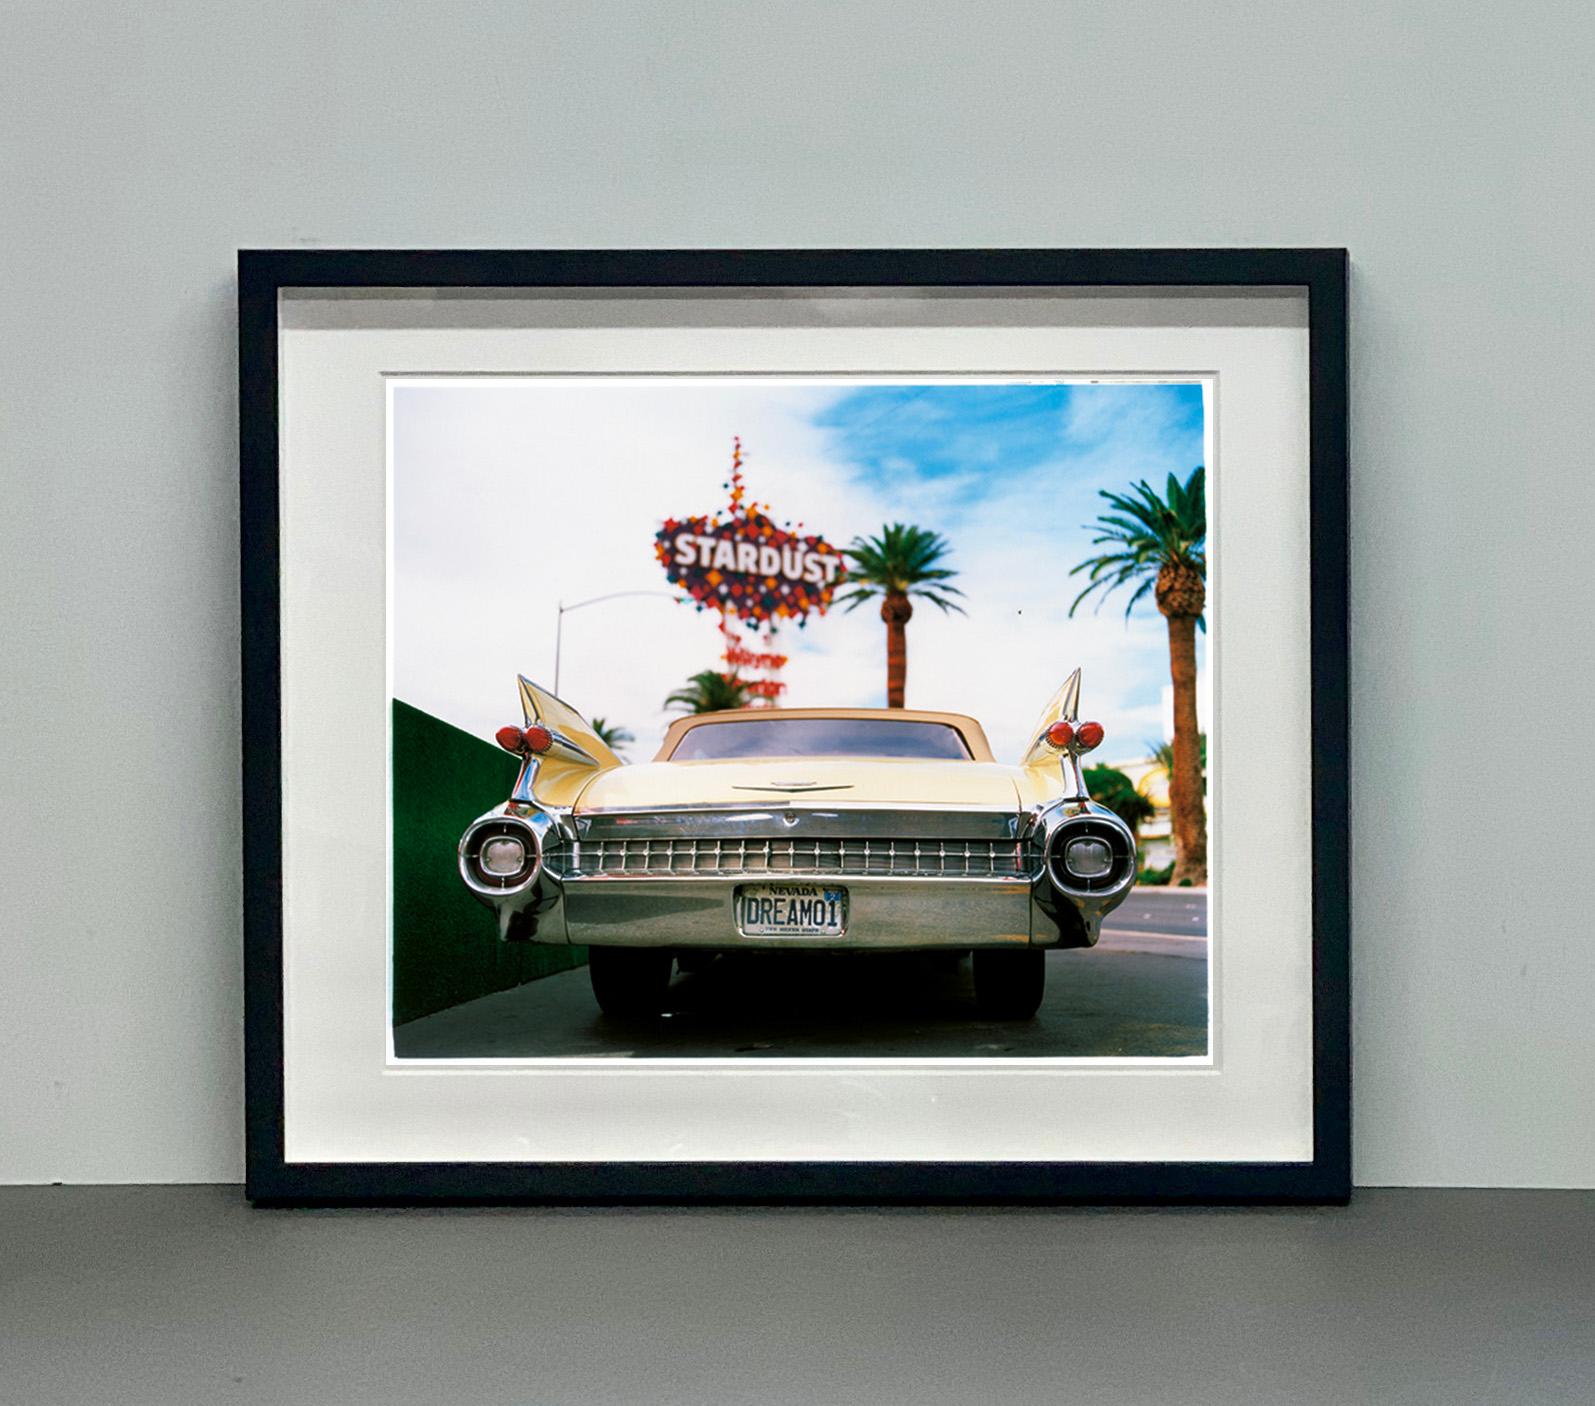 Stardust Dreams, Las Vegas, Nevada - American pop art color photography - Photograph by Richard Heeps